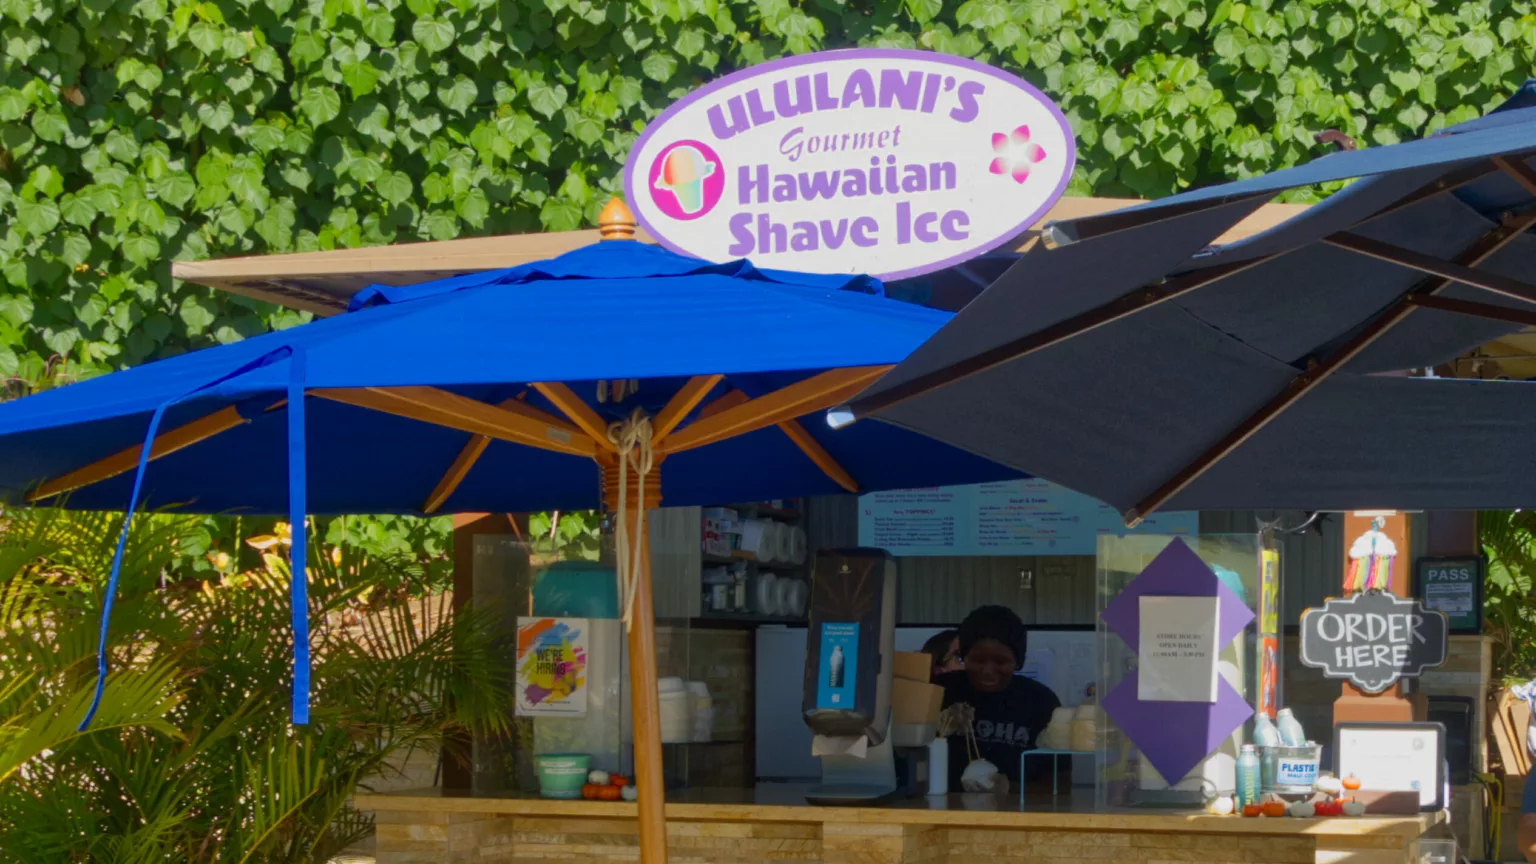 Ululani's Hawaiian Shave Ice Ka'anapali